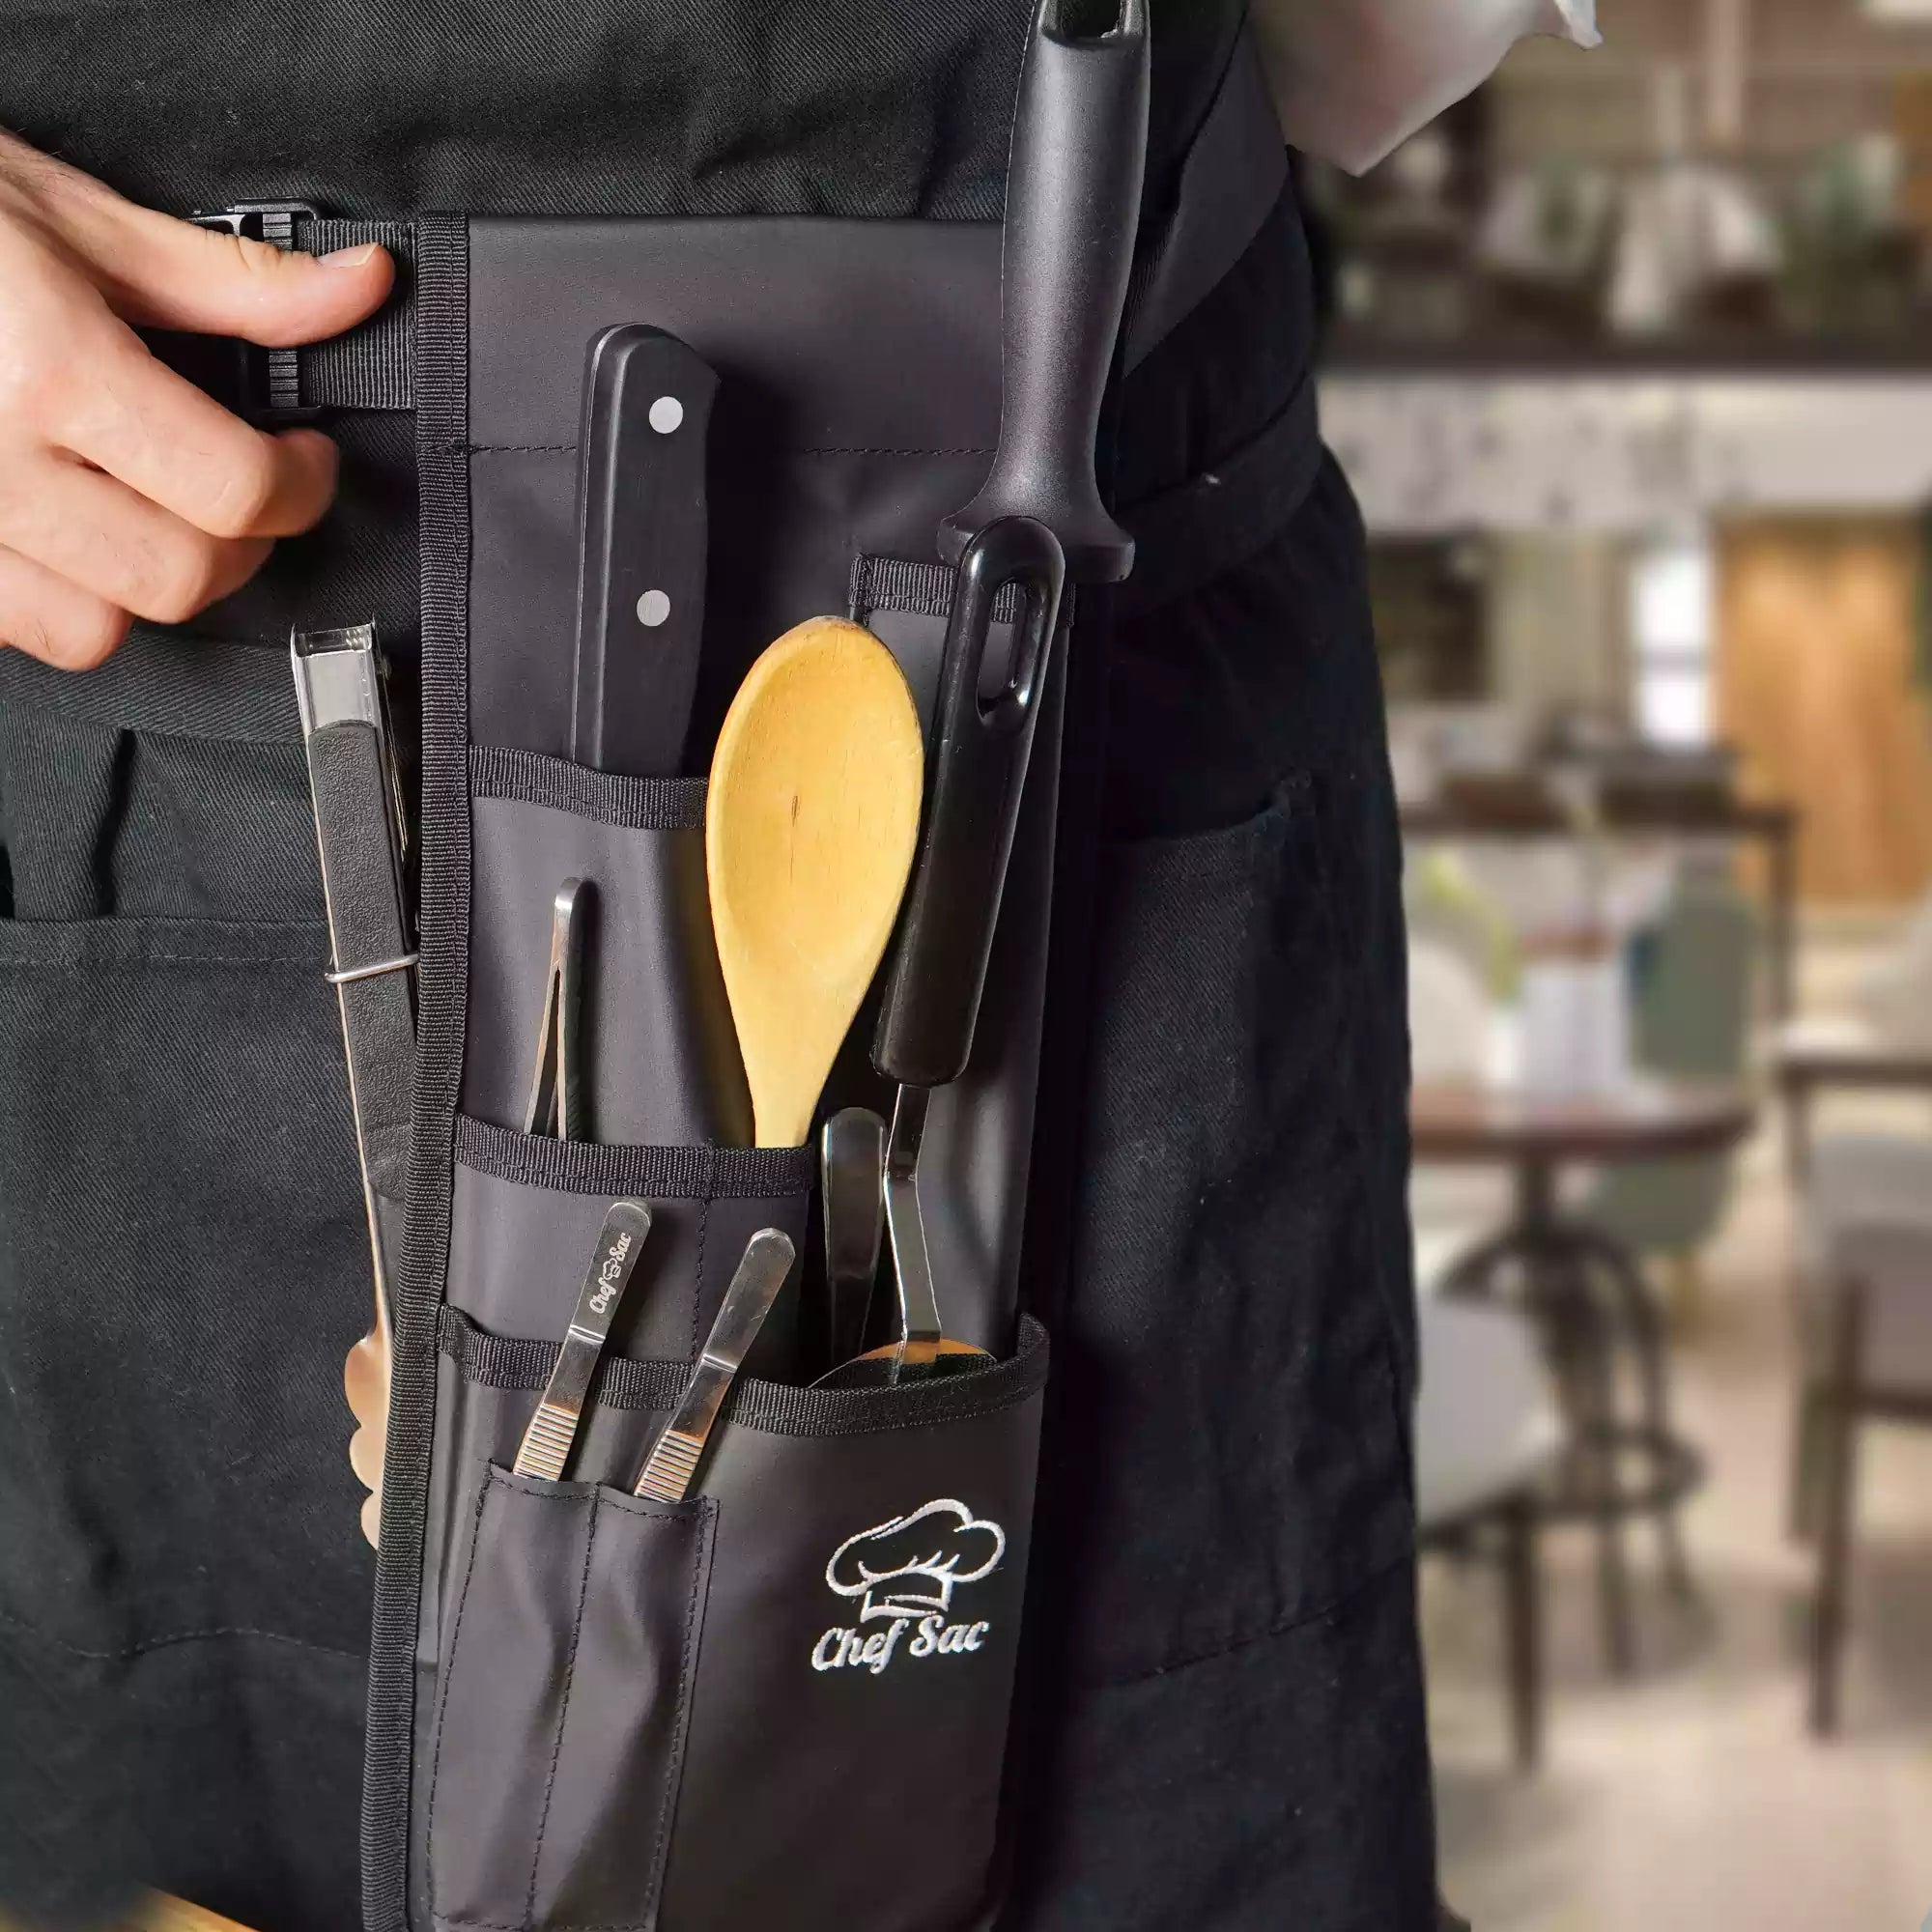 Chef Knife Sheath - Gun Holsters, Rifle Slings and Knife Sheathes